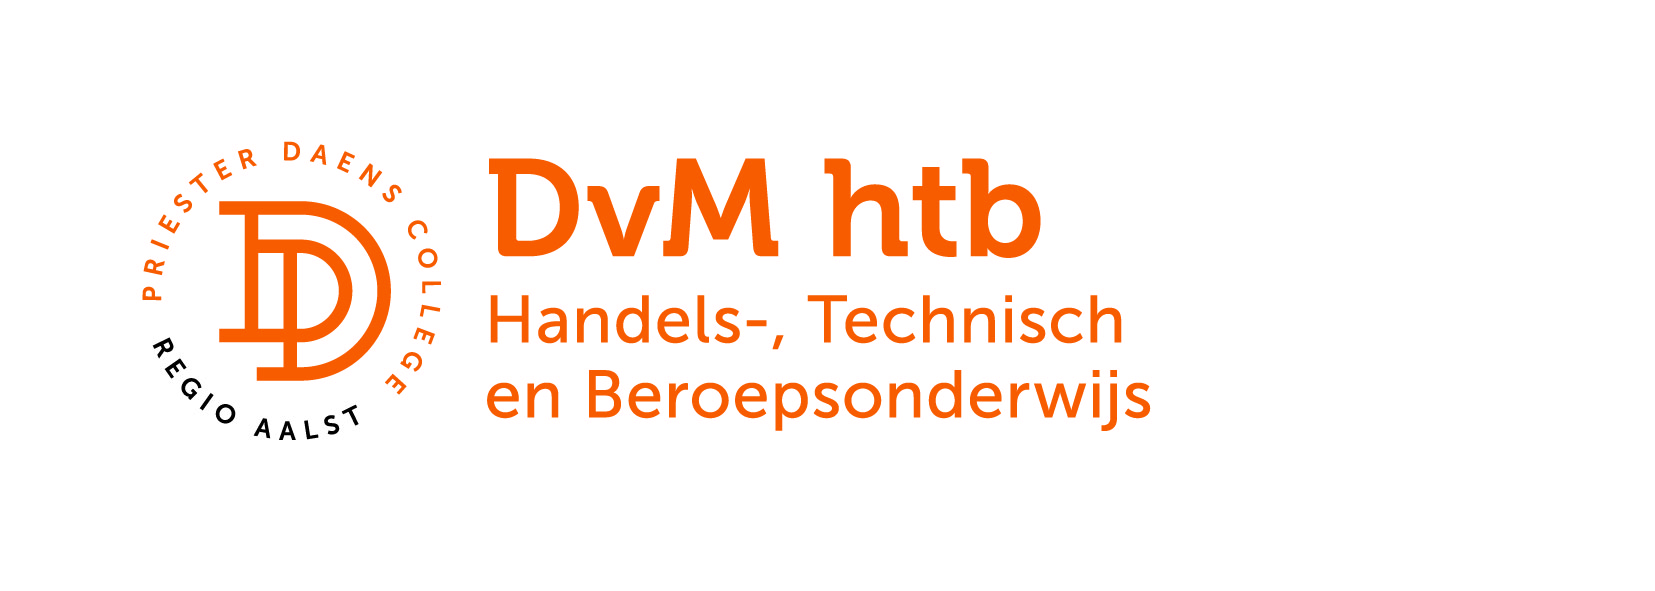 DvM htb logo